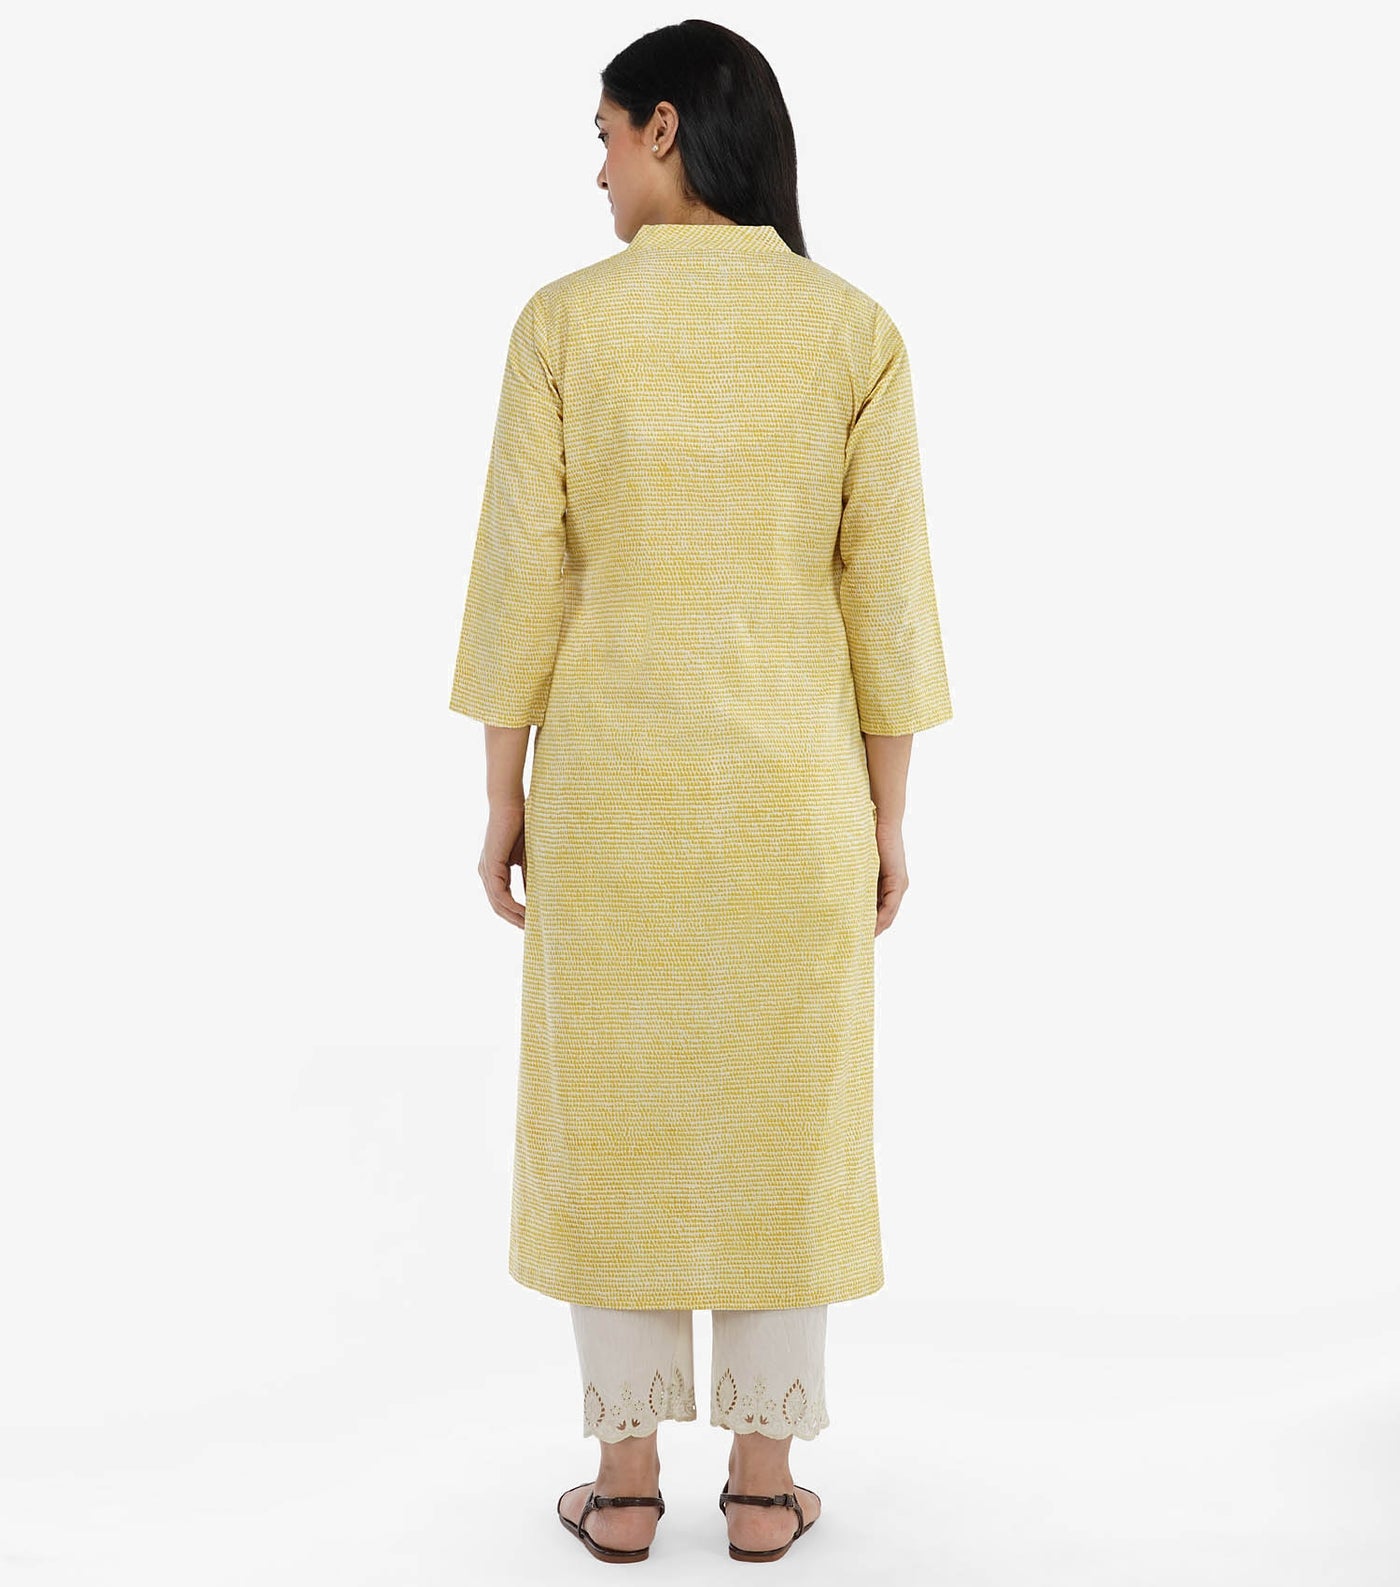 Yellow printed cambric kurta